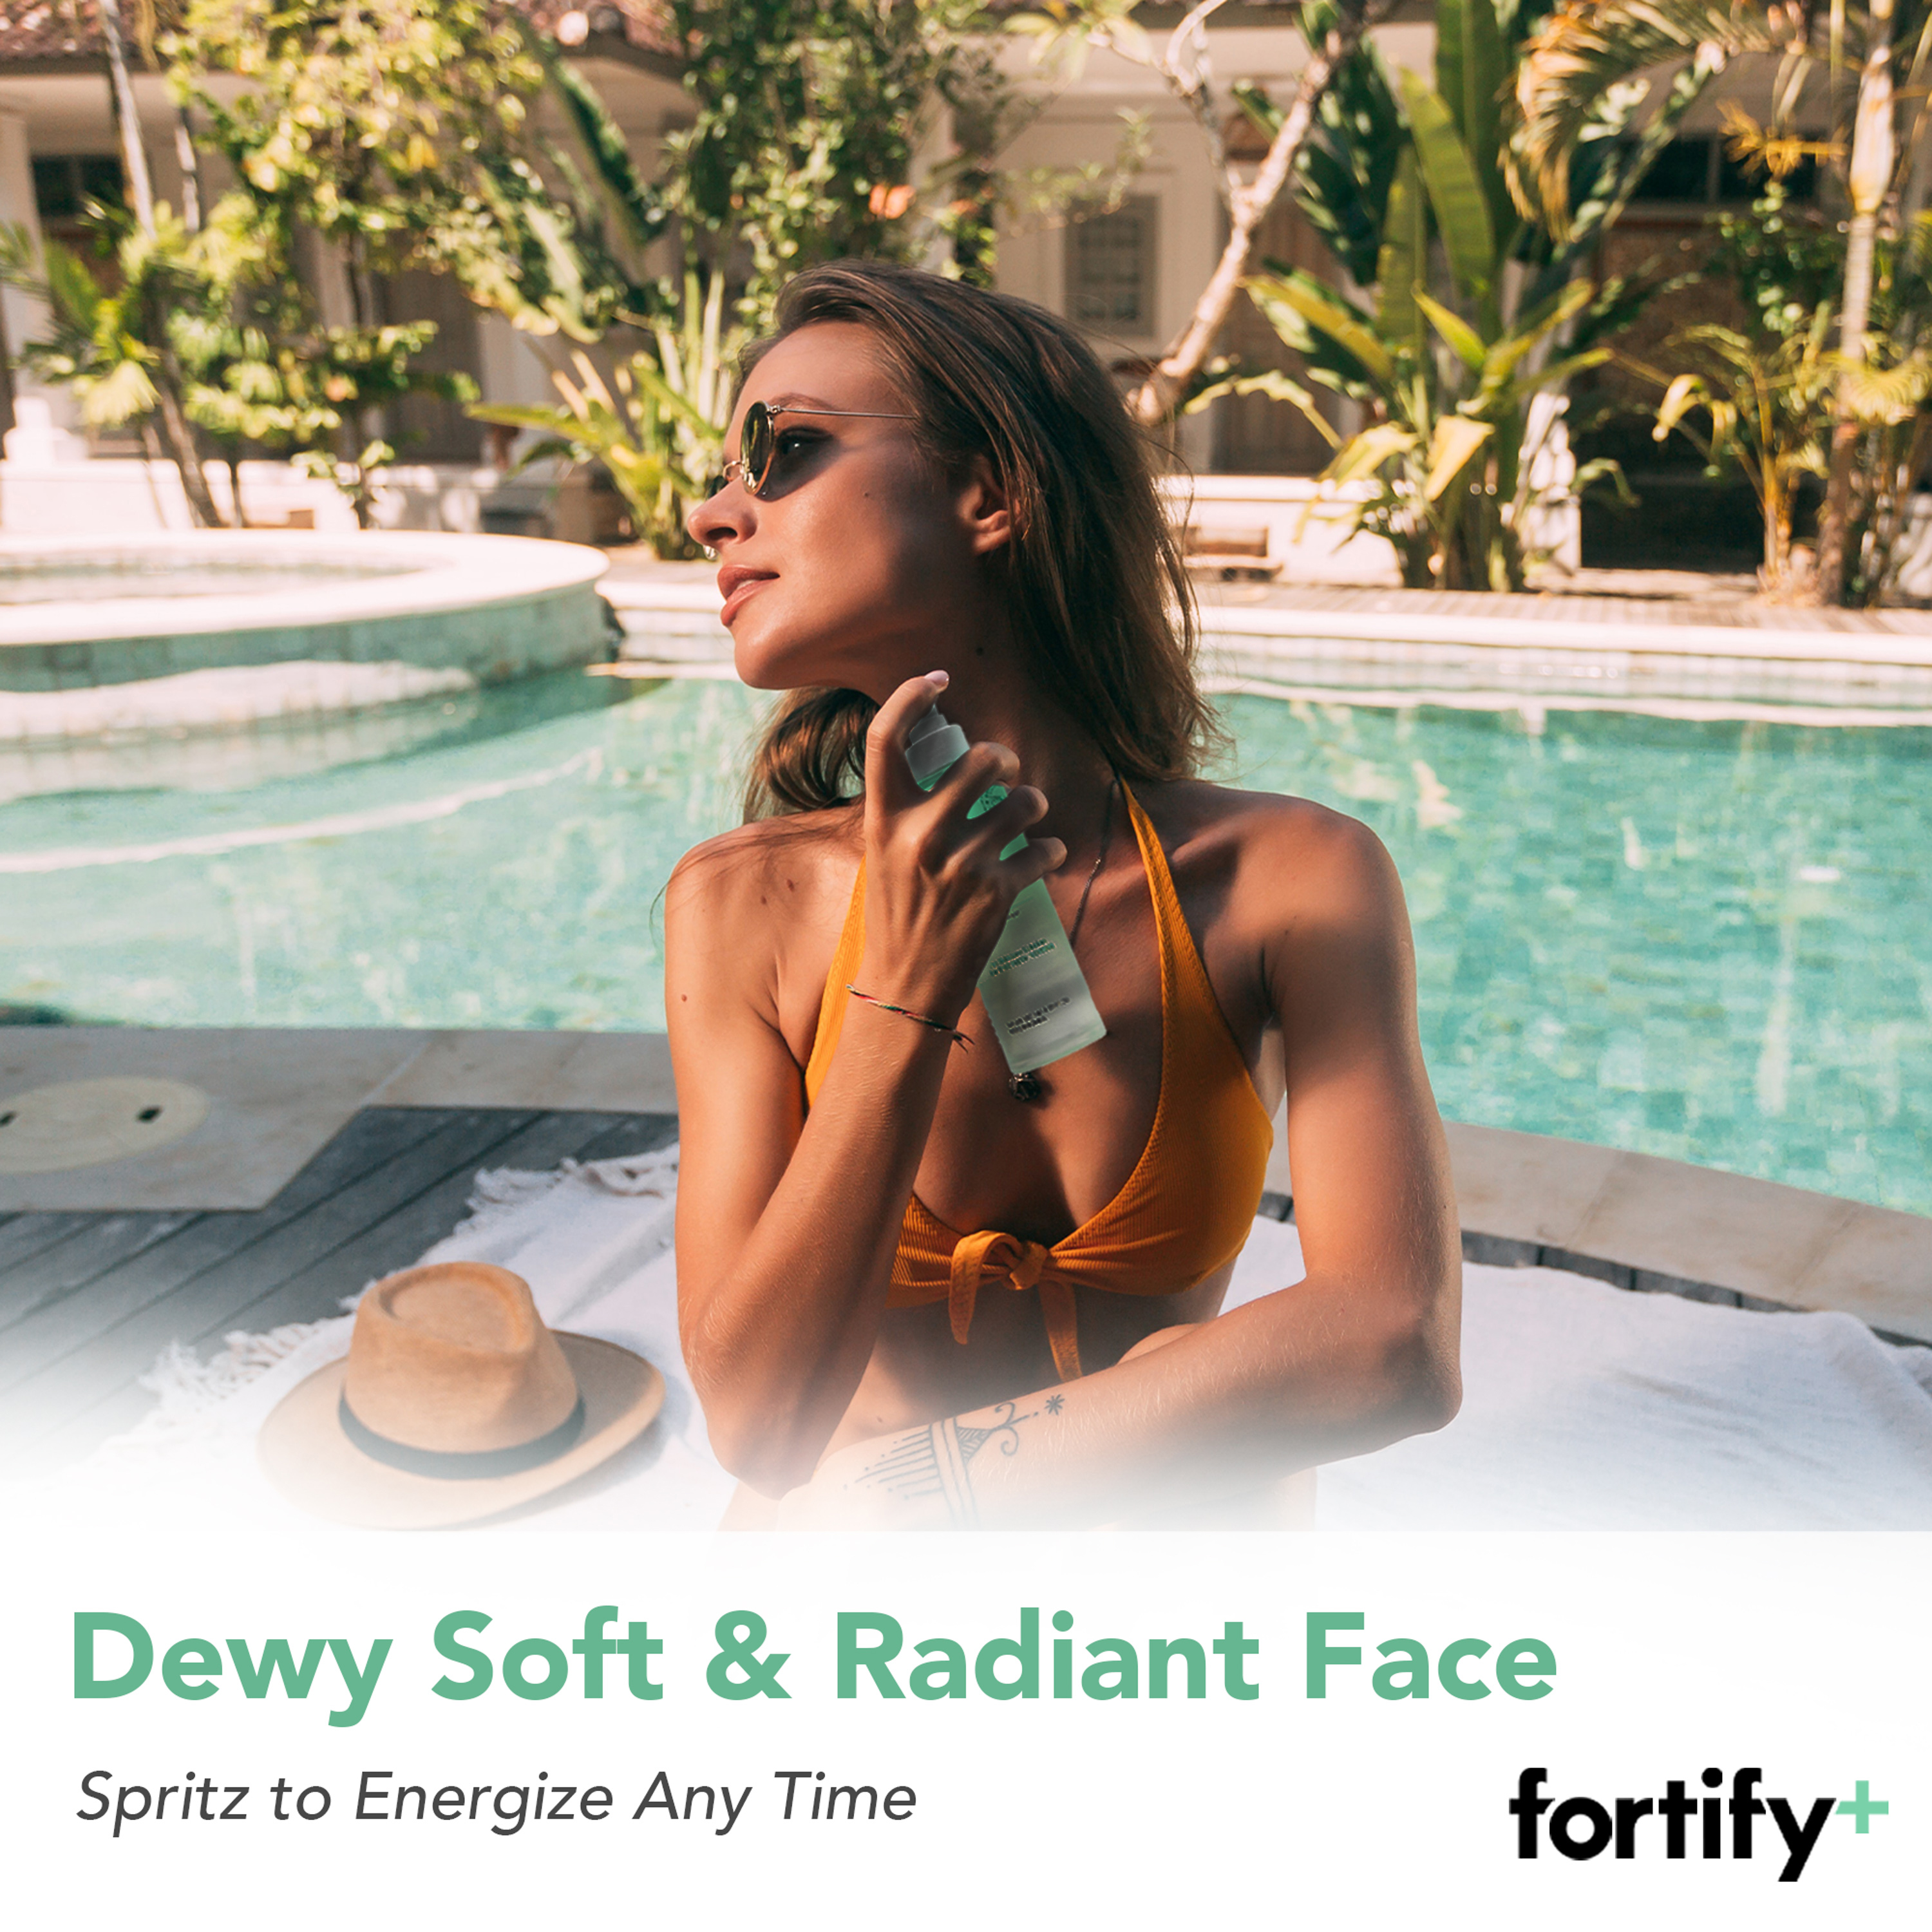 Fortify Facial Toner Mist, Setting Spray, 4.39 fl oz - image 5 of 10